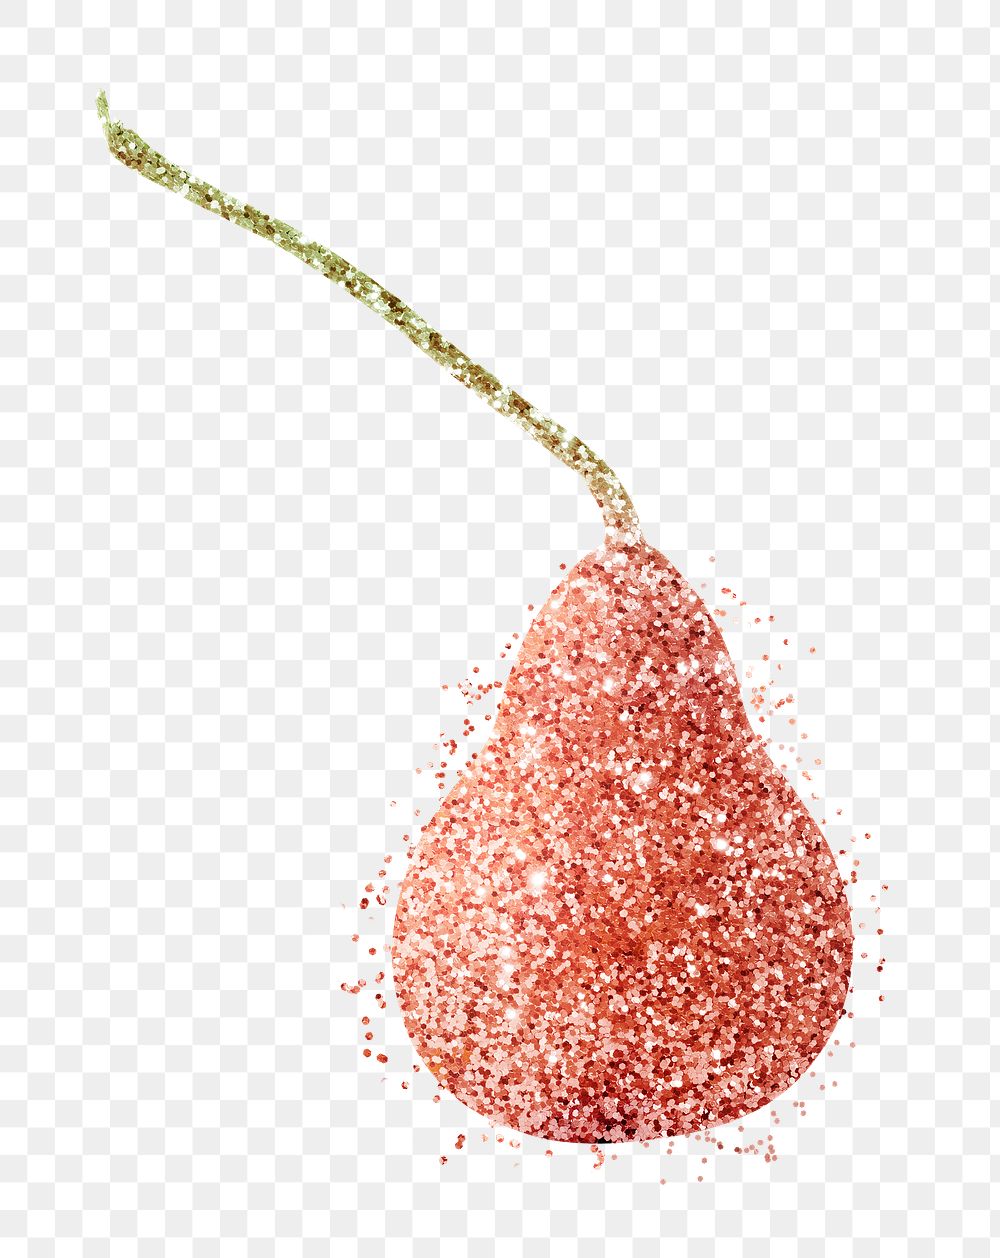 Pink glittery pear design element